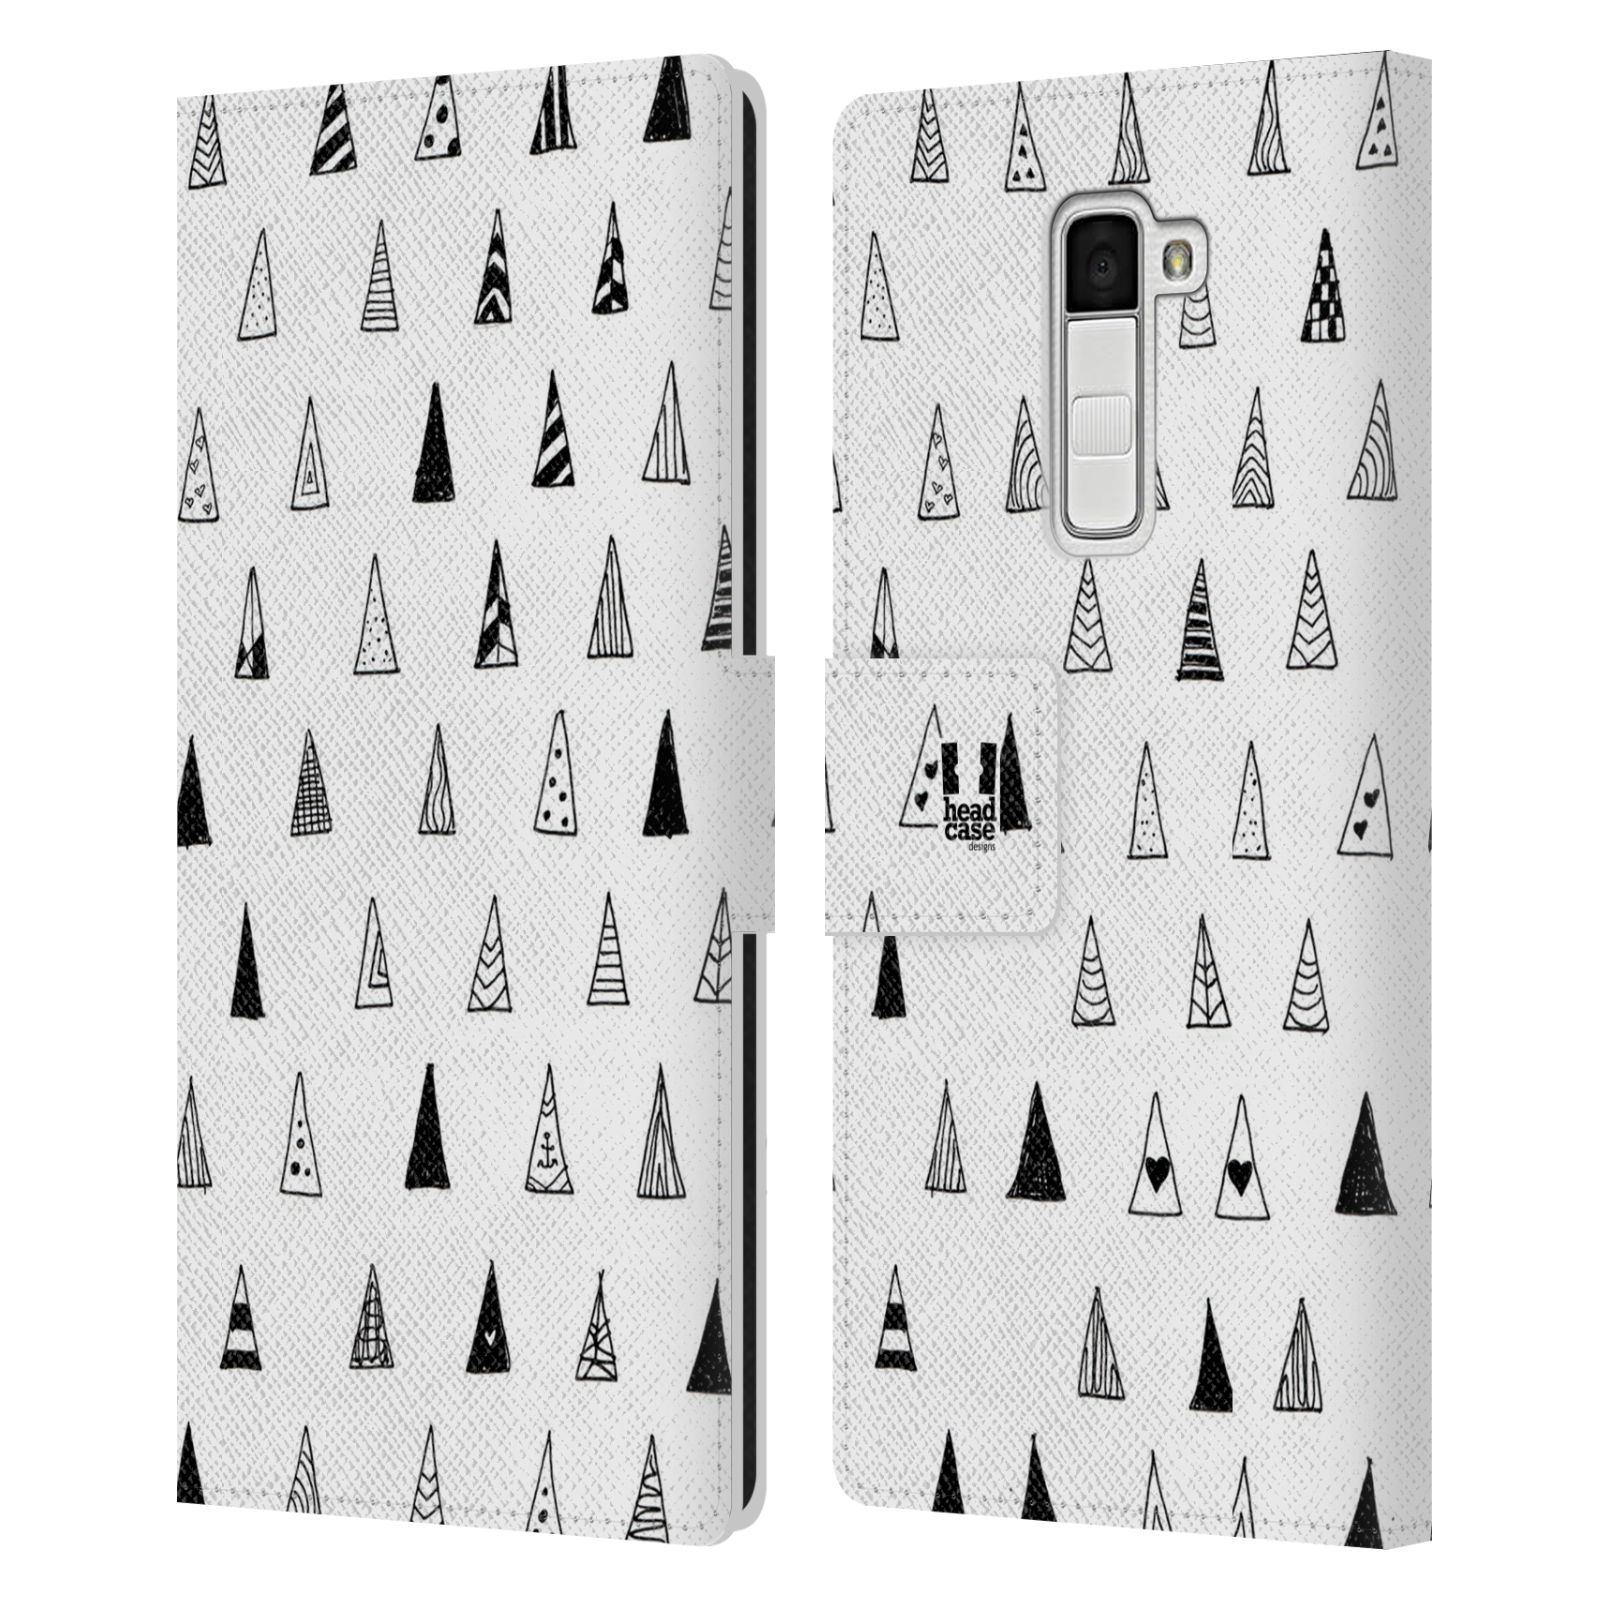 HEAD CASE Flipové pouzdro pro mobil LG K10 kresba a čmáranice trojúhelníky černá a bílá